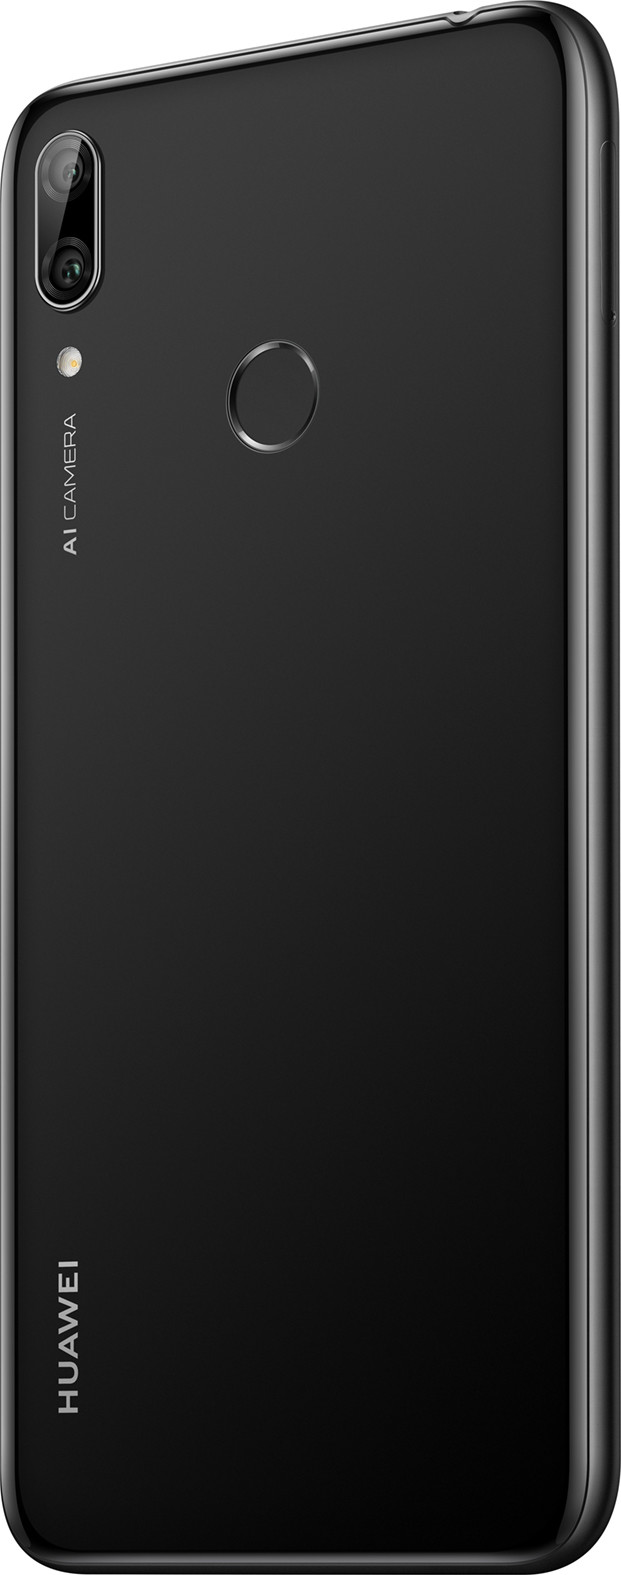 Смартфон Huawei Y7 (2019) 32GB Midnight Black (Черный)